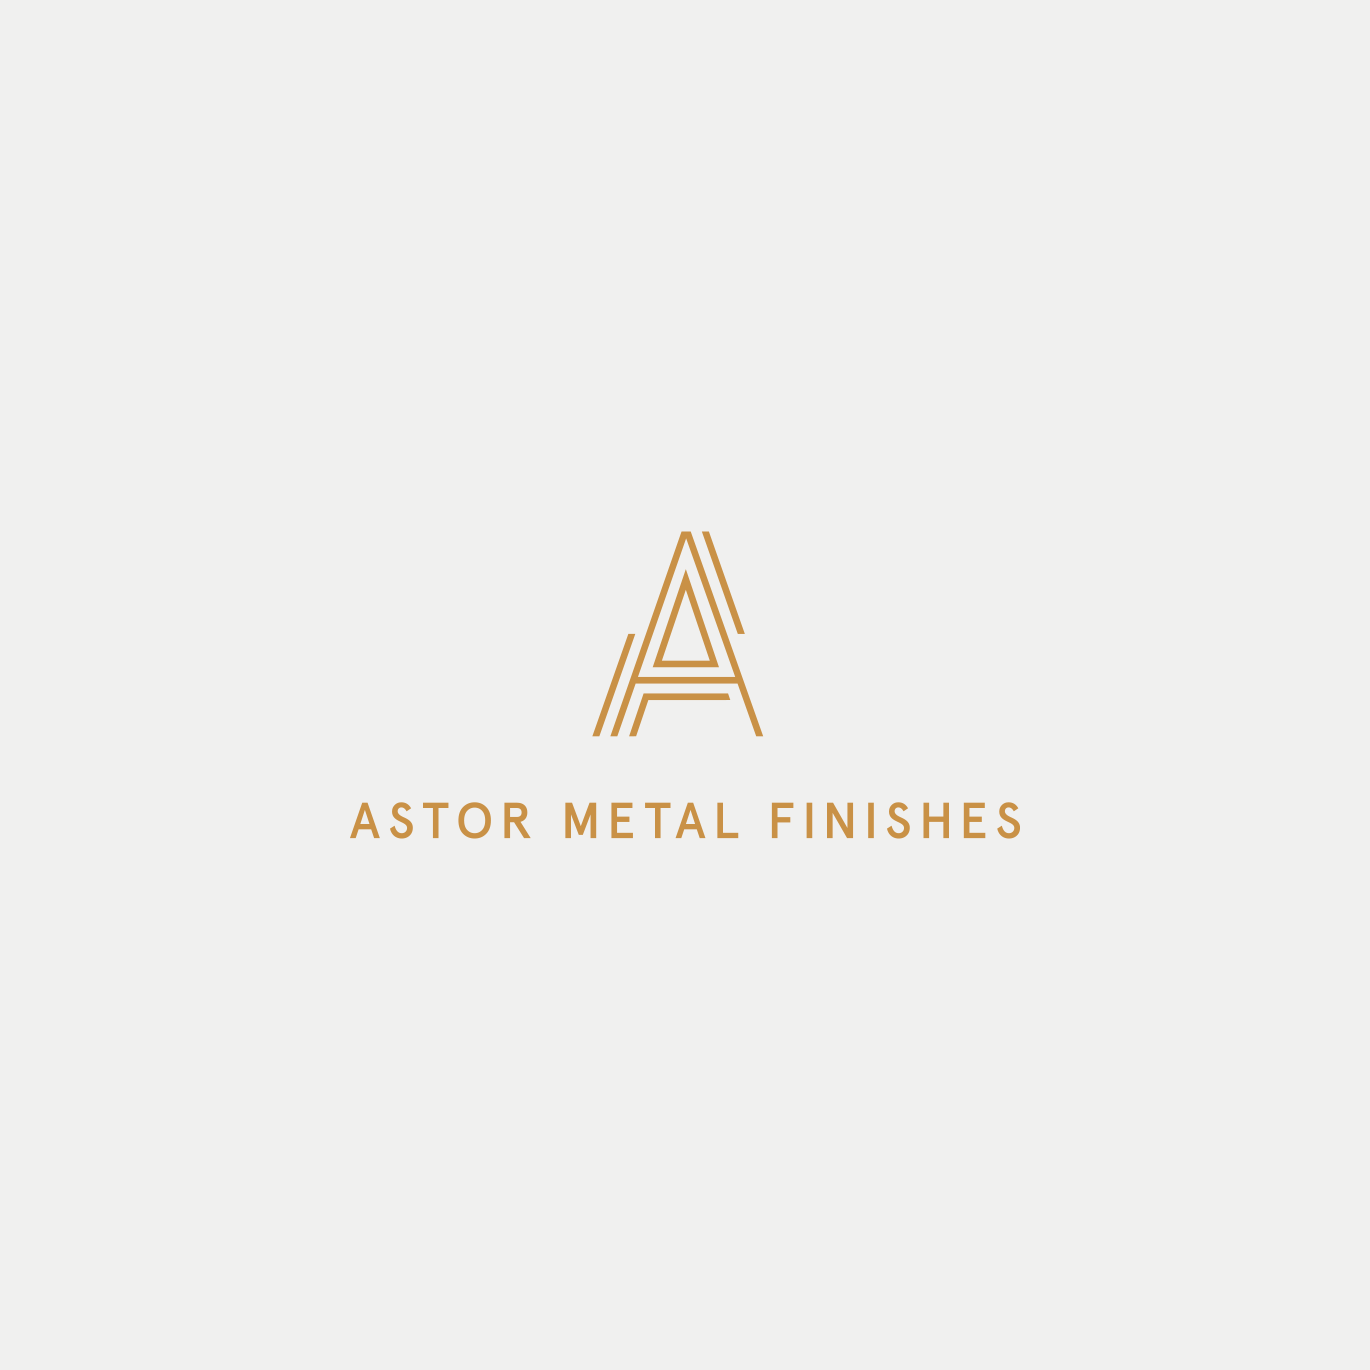 Astor Metal Finishes Logo